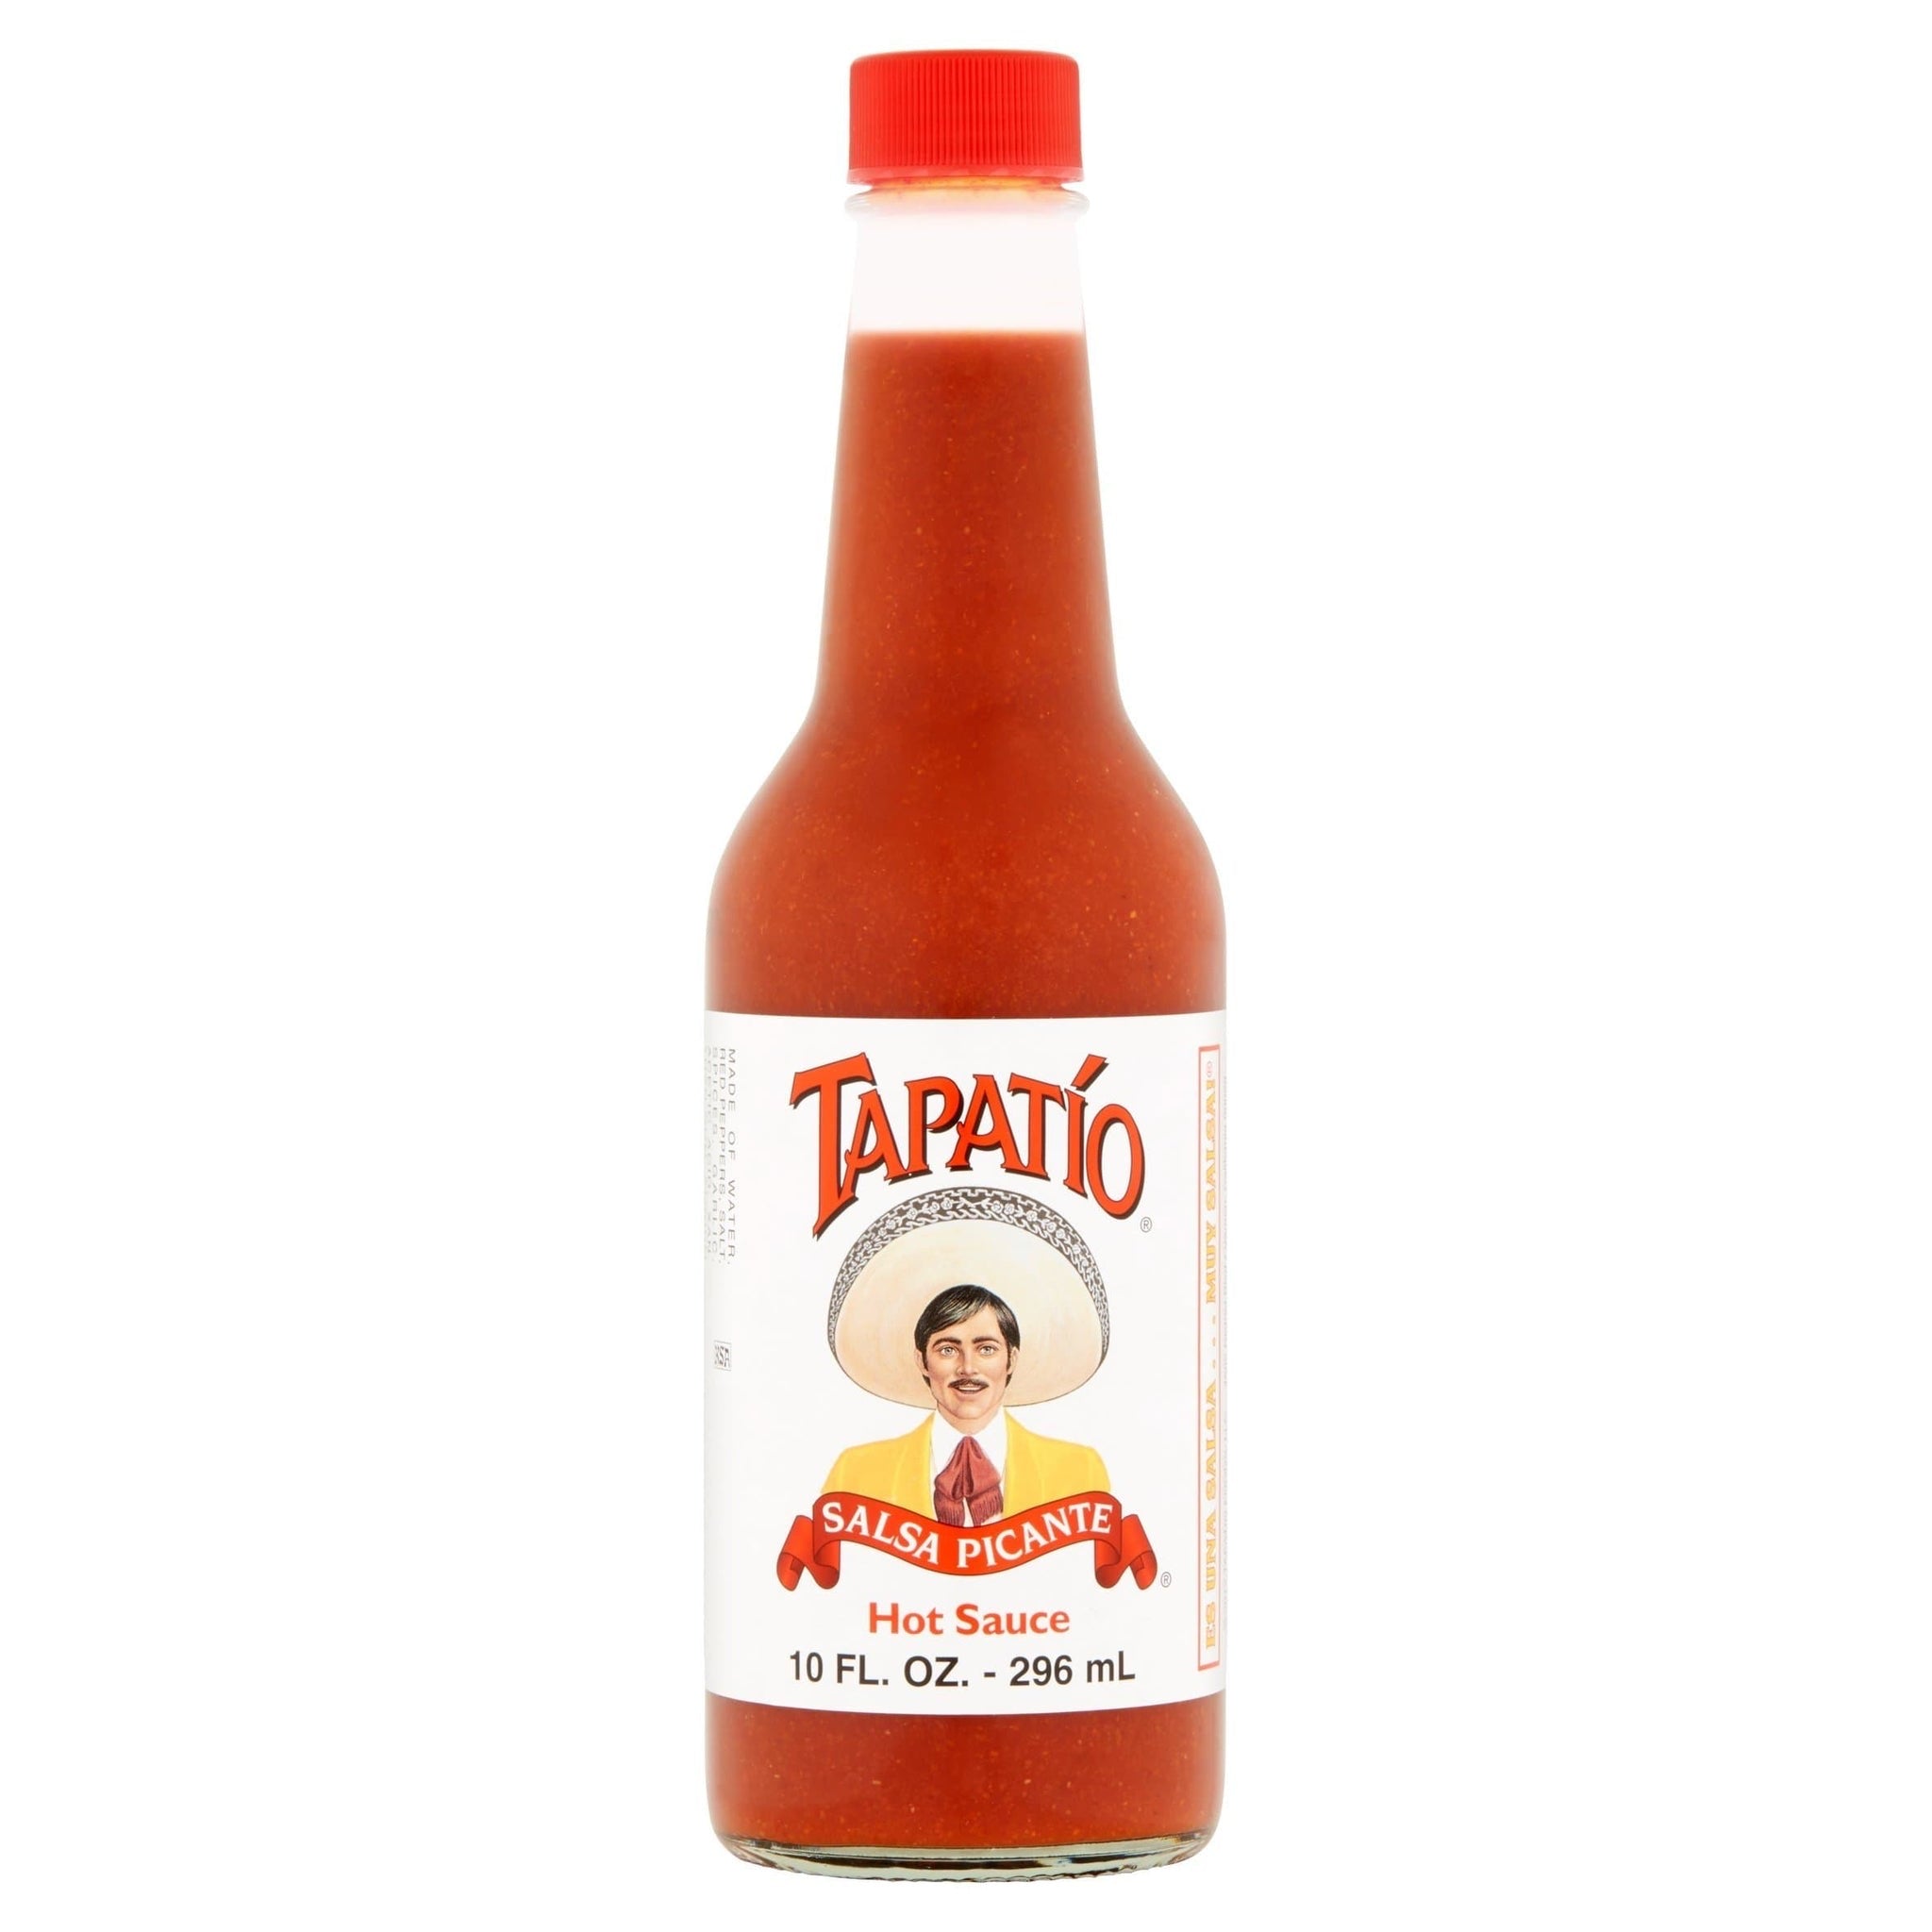 TAPATIO Salsa Picante Hot Sauce 296ml